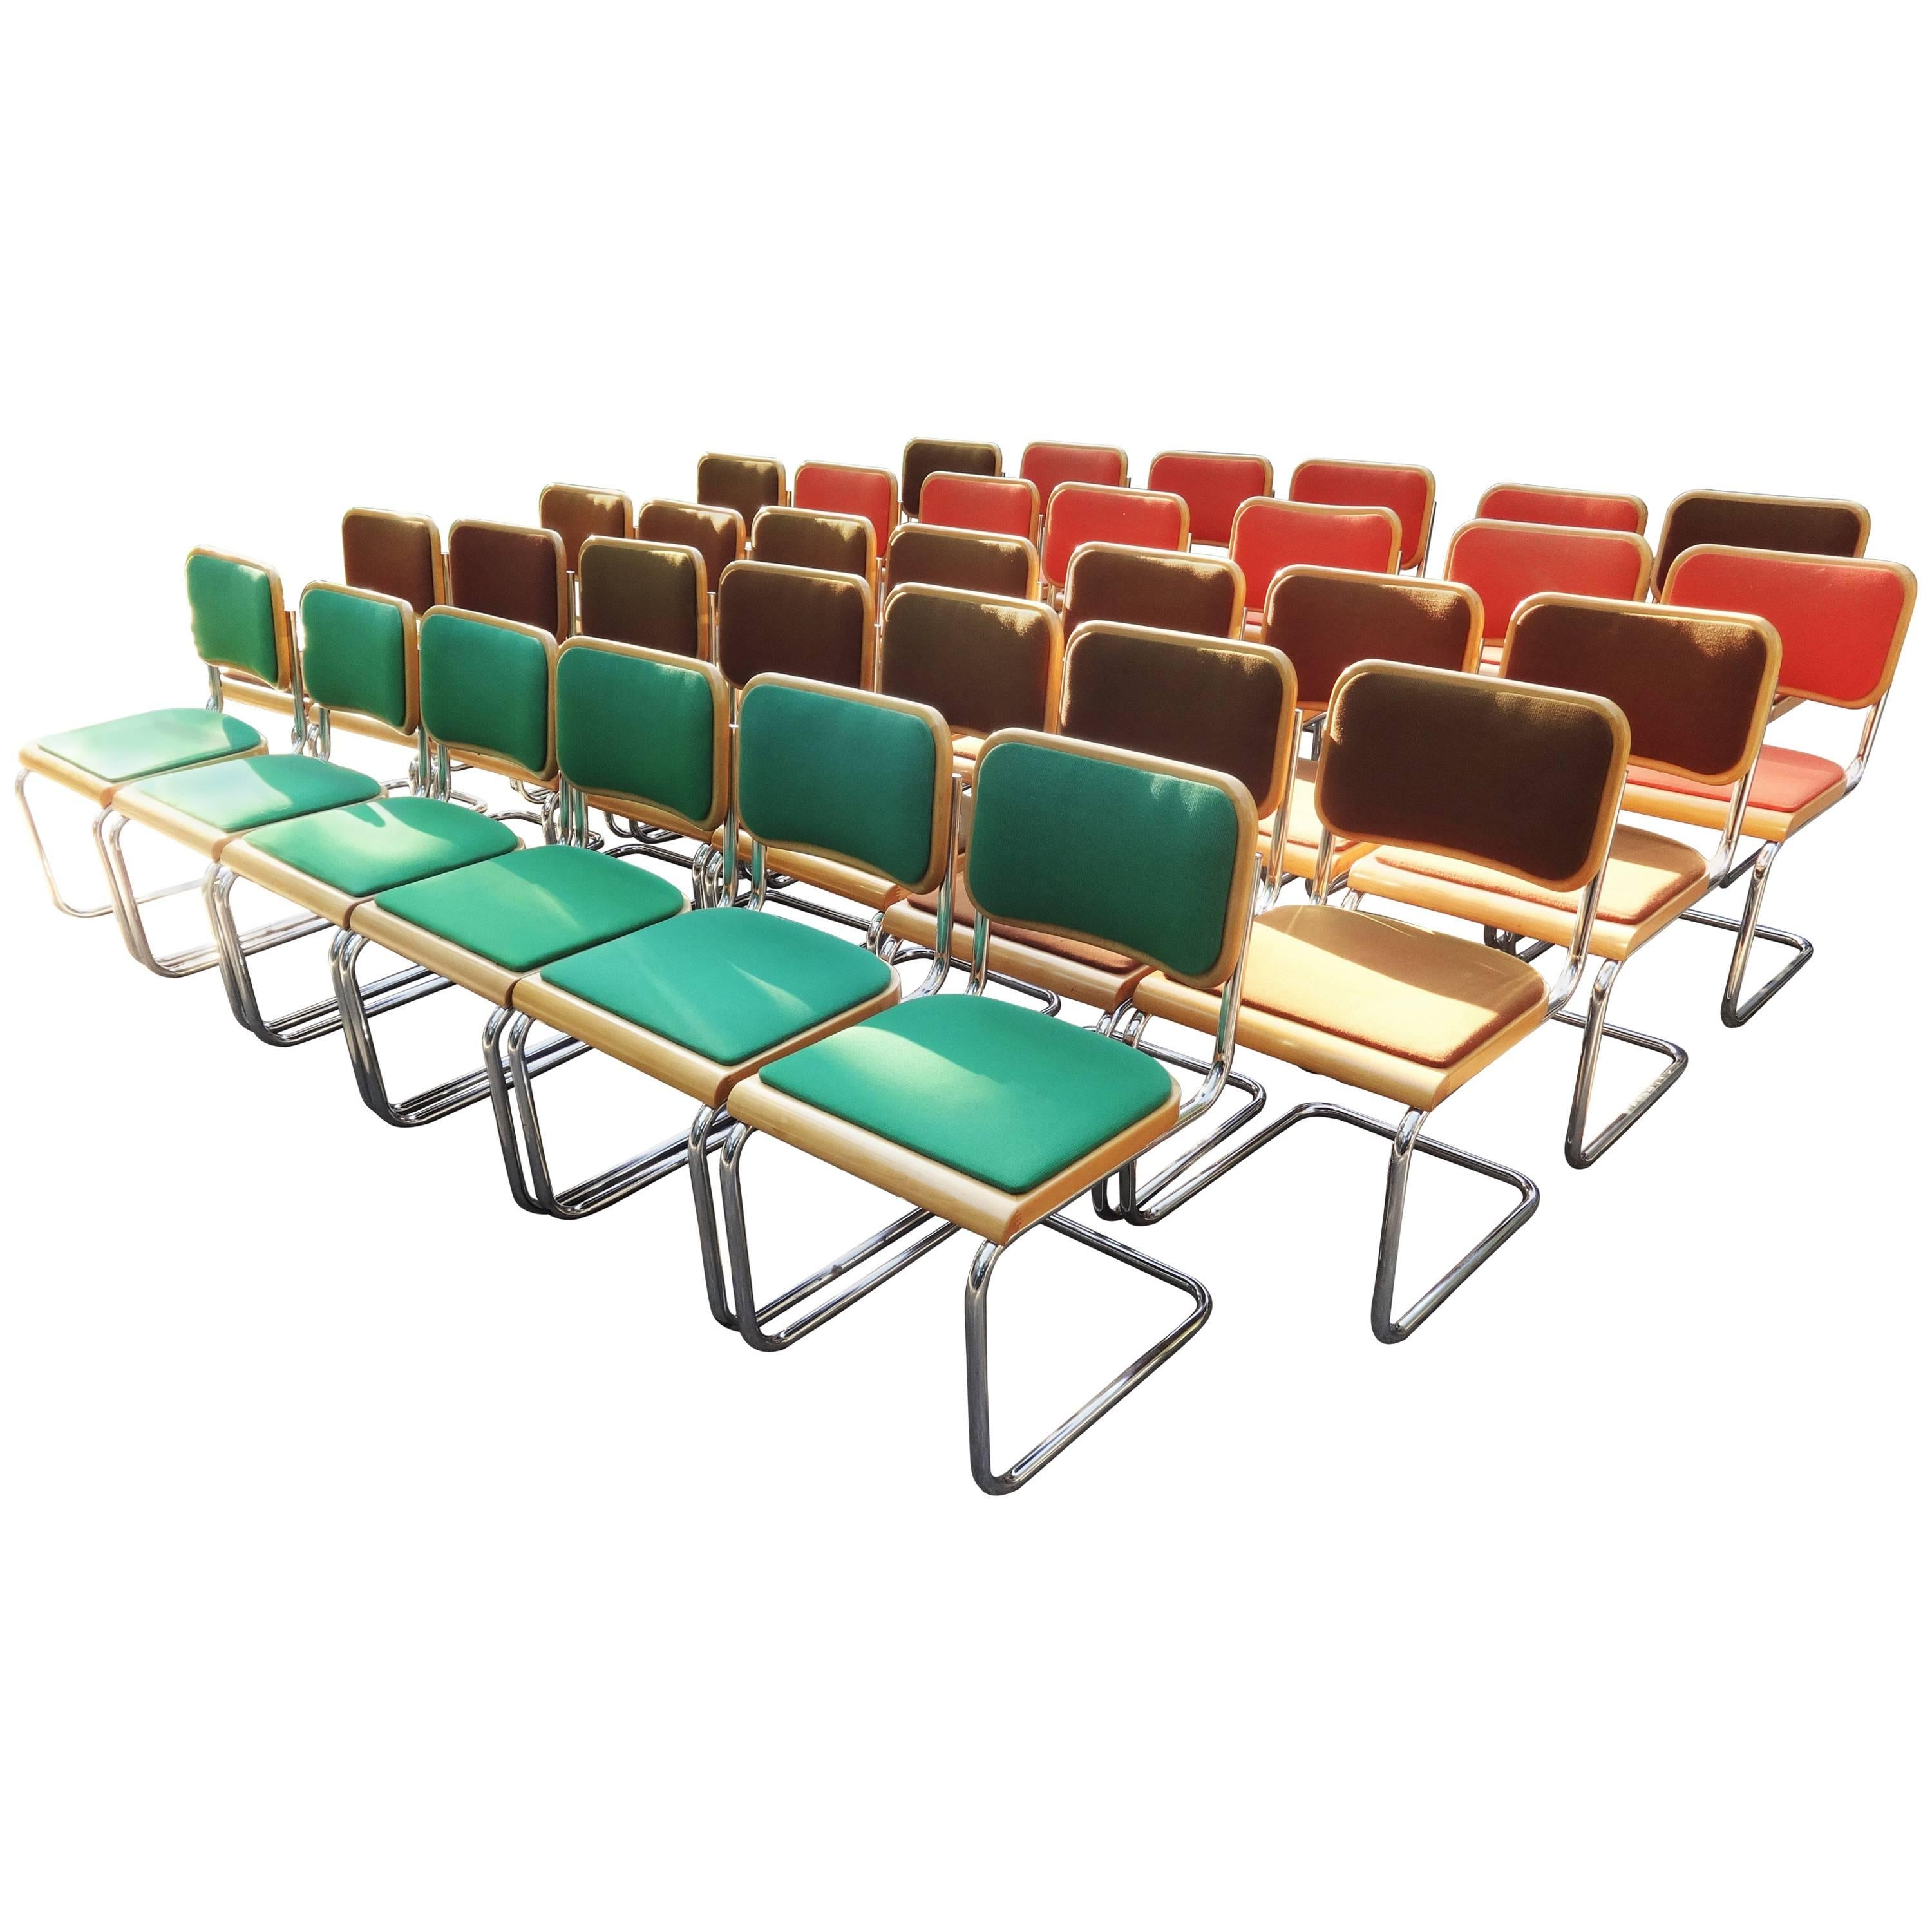 23 Multicolored Marcel Breuer "Cesca" Chairs